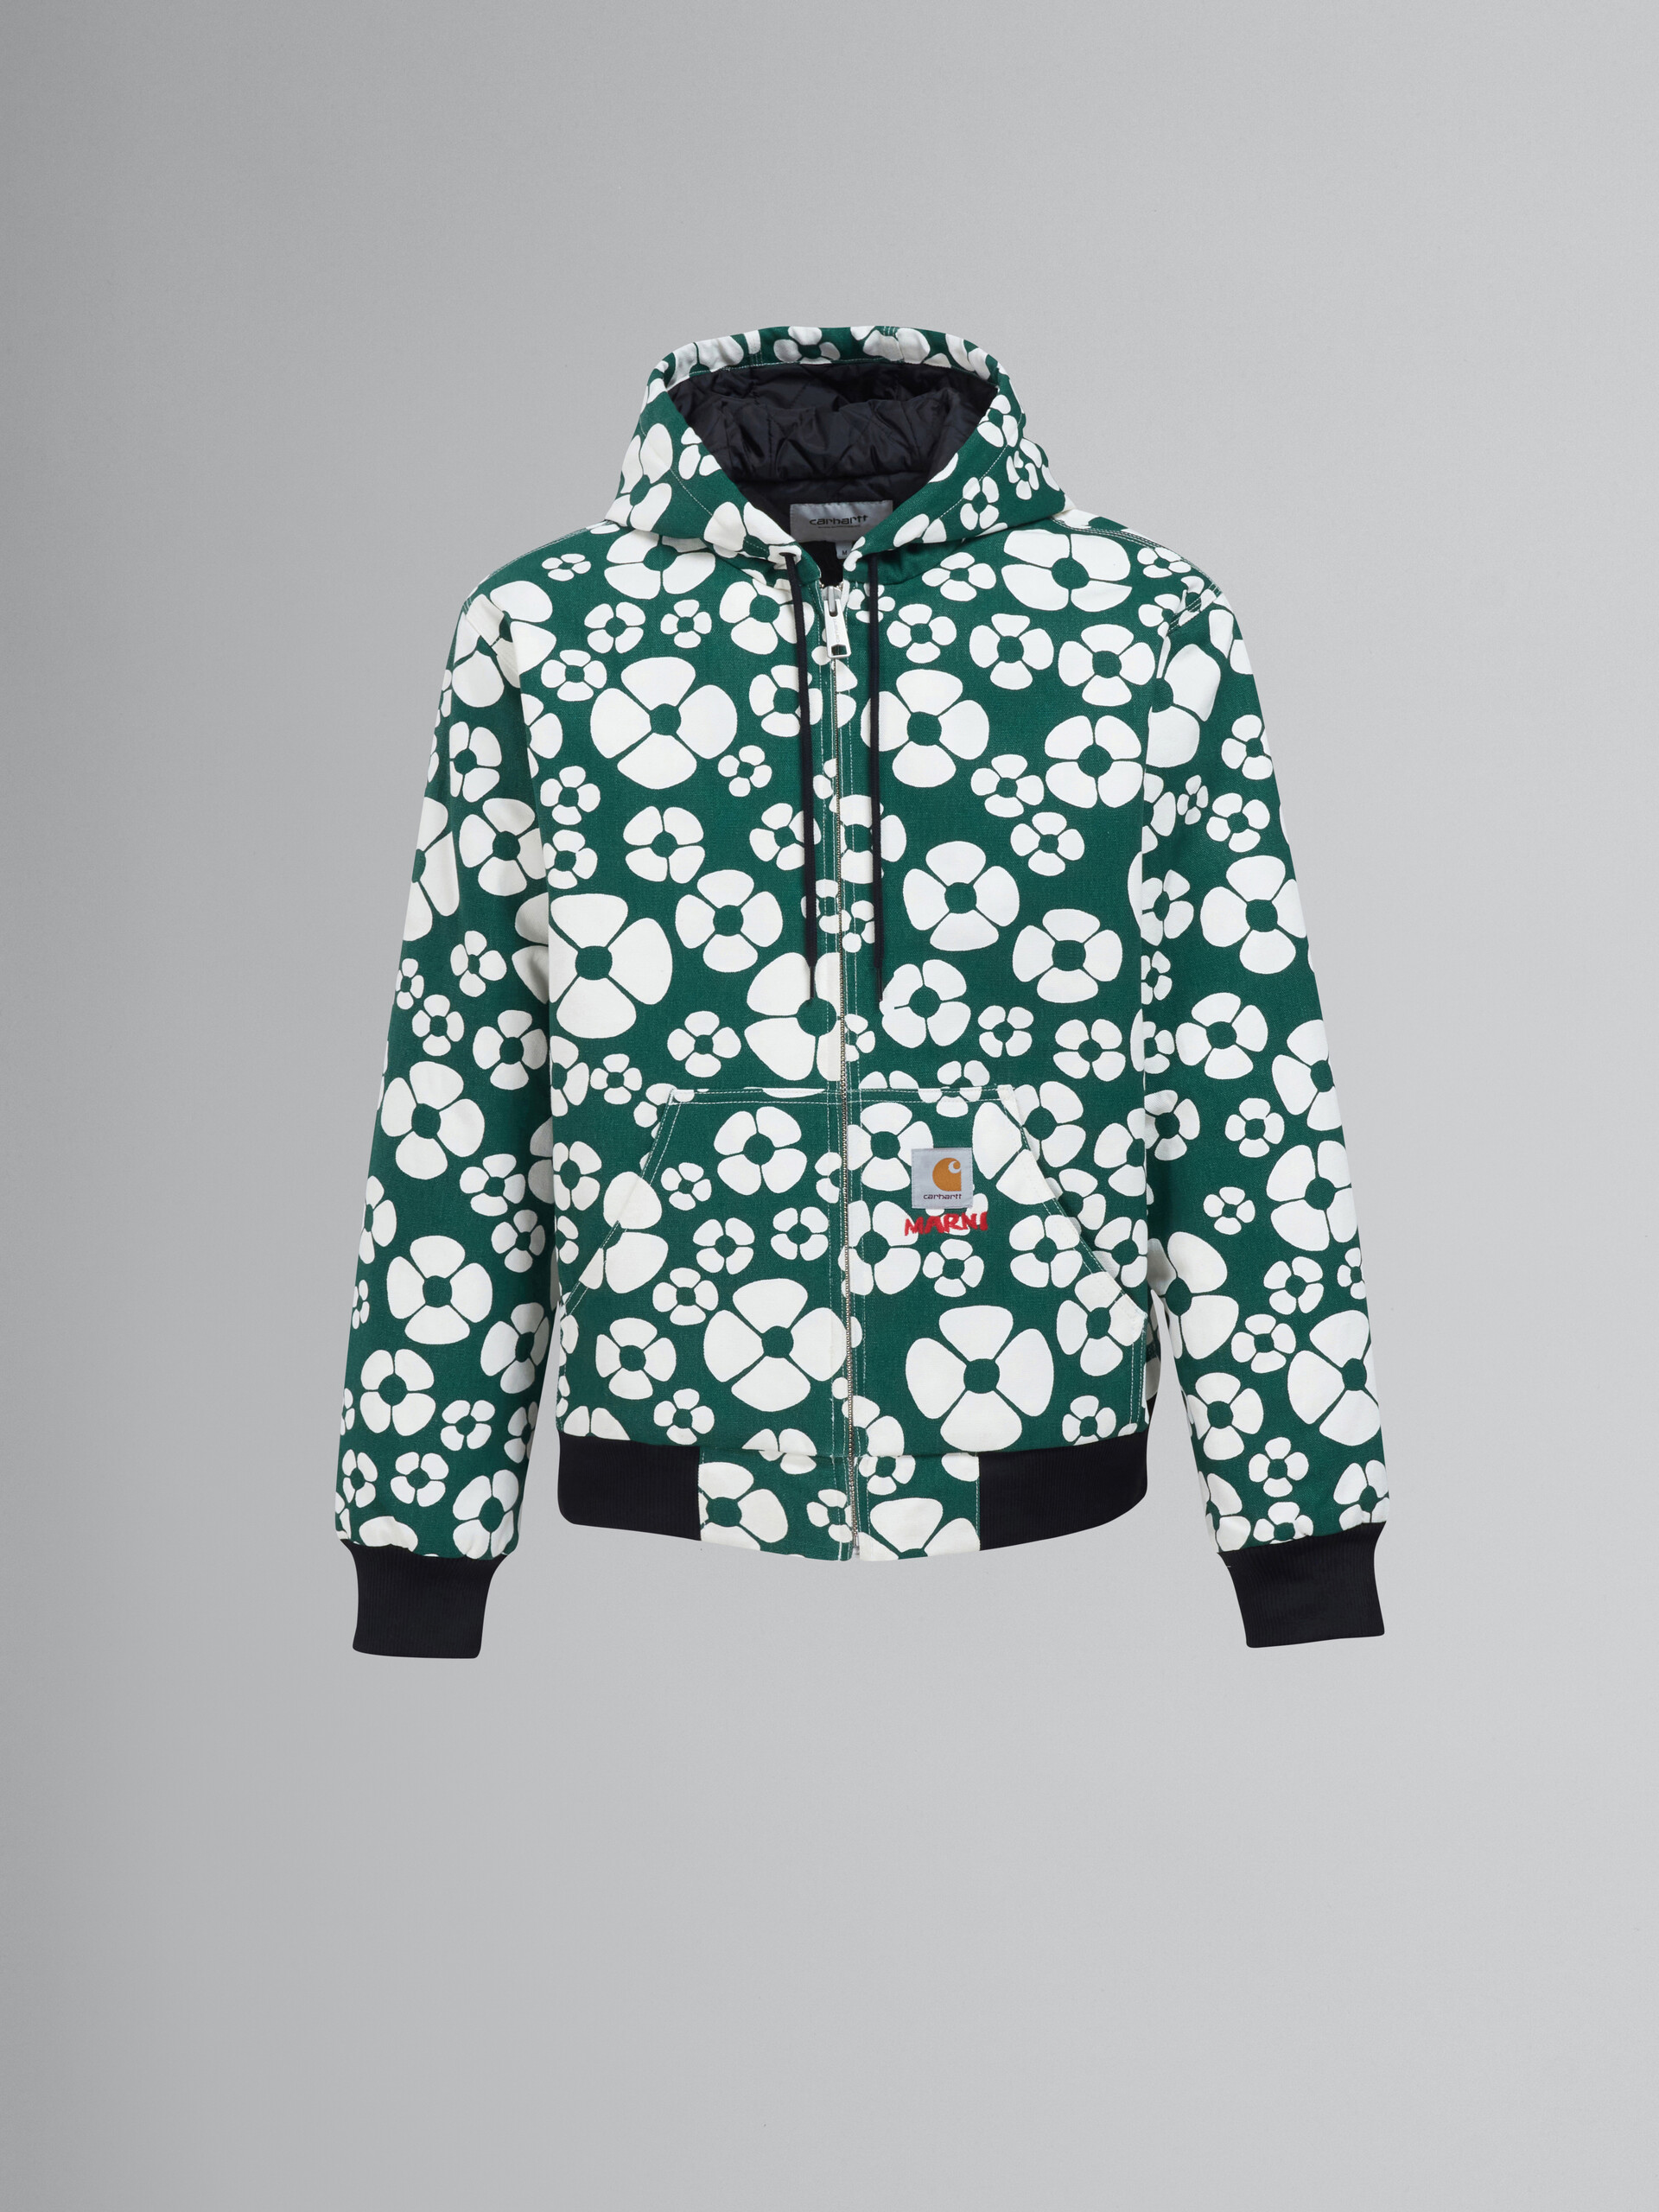 MARNI x CARHARTT WIP - green long-sleeved floral jacket - Jackets - Image 1